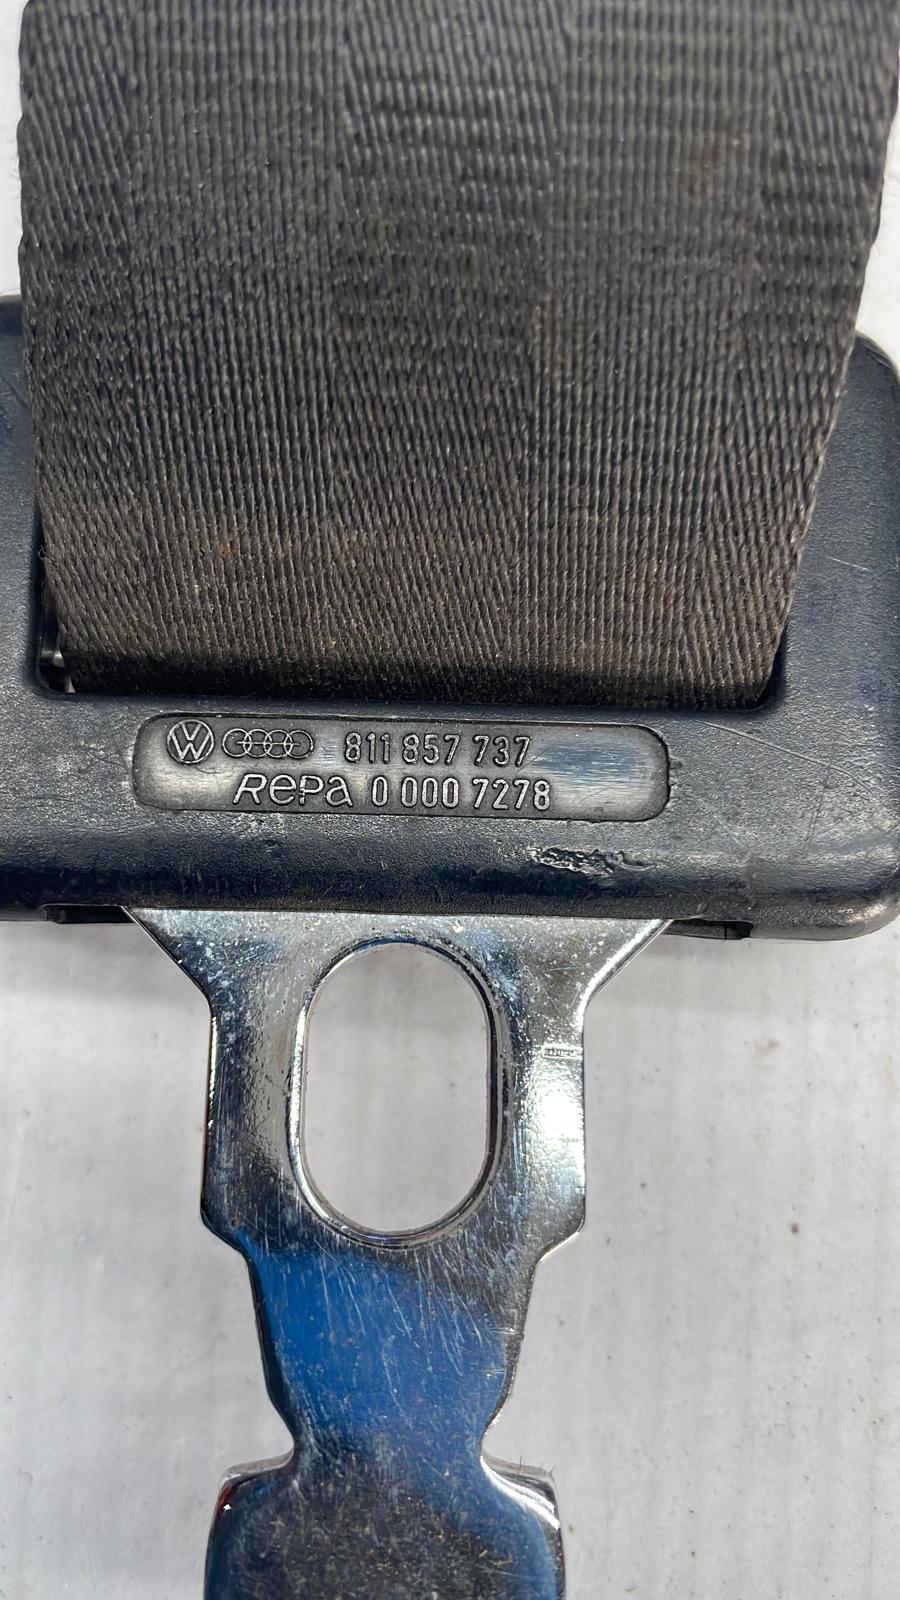 Cintura di sicurezza statica posteriore a 2 punti Porsche 924/944 usata, singola 811 857 737